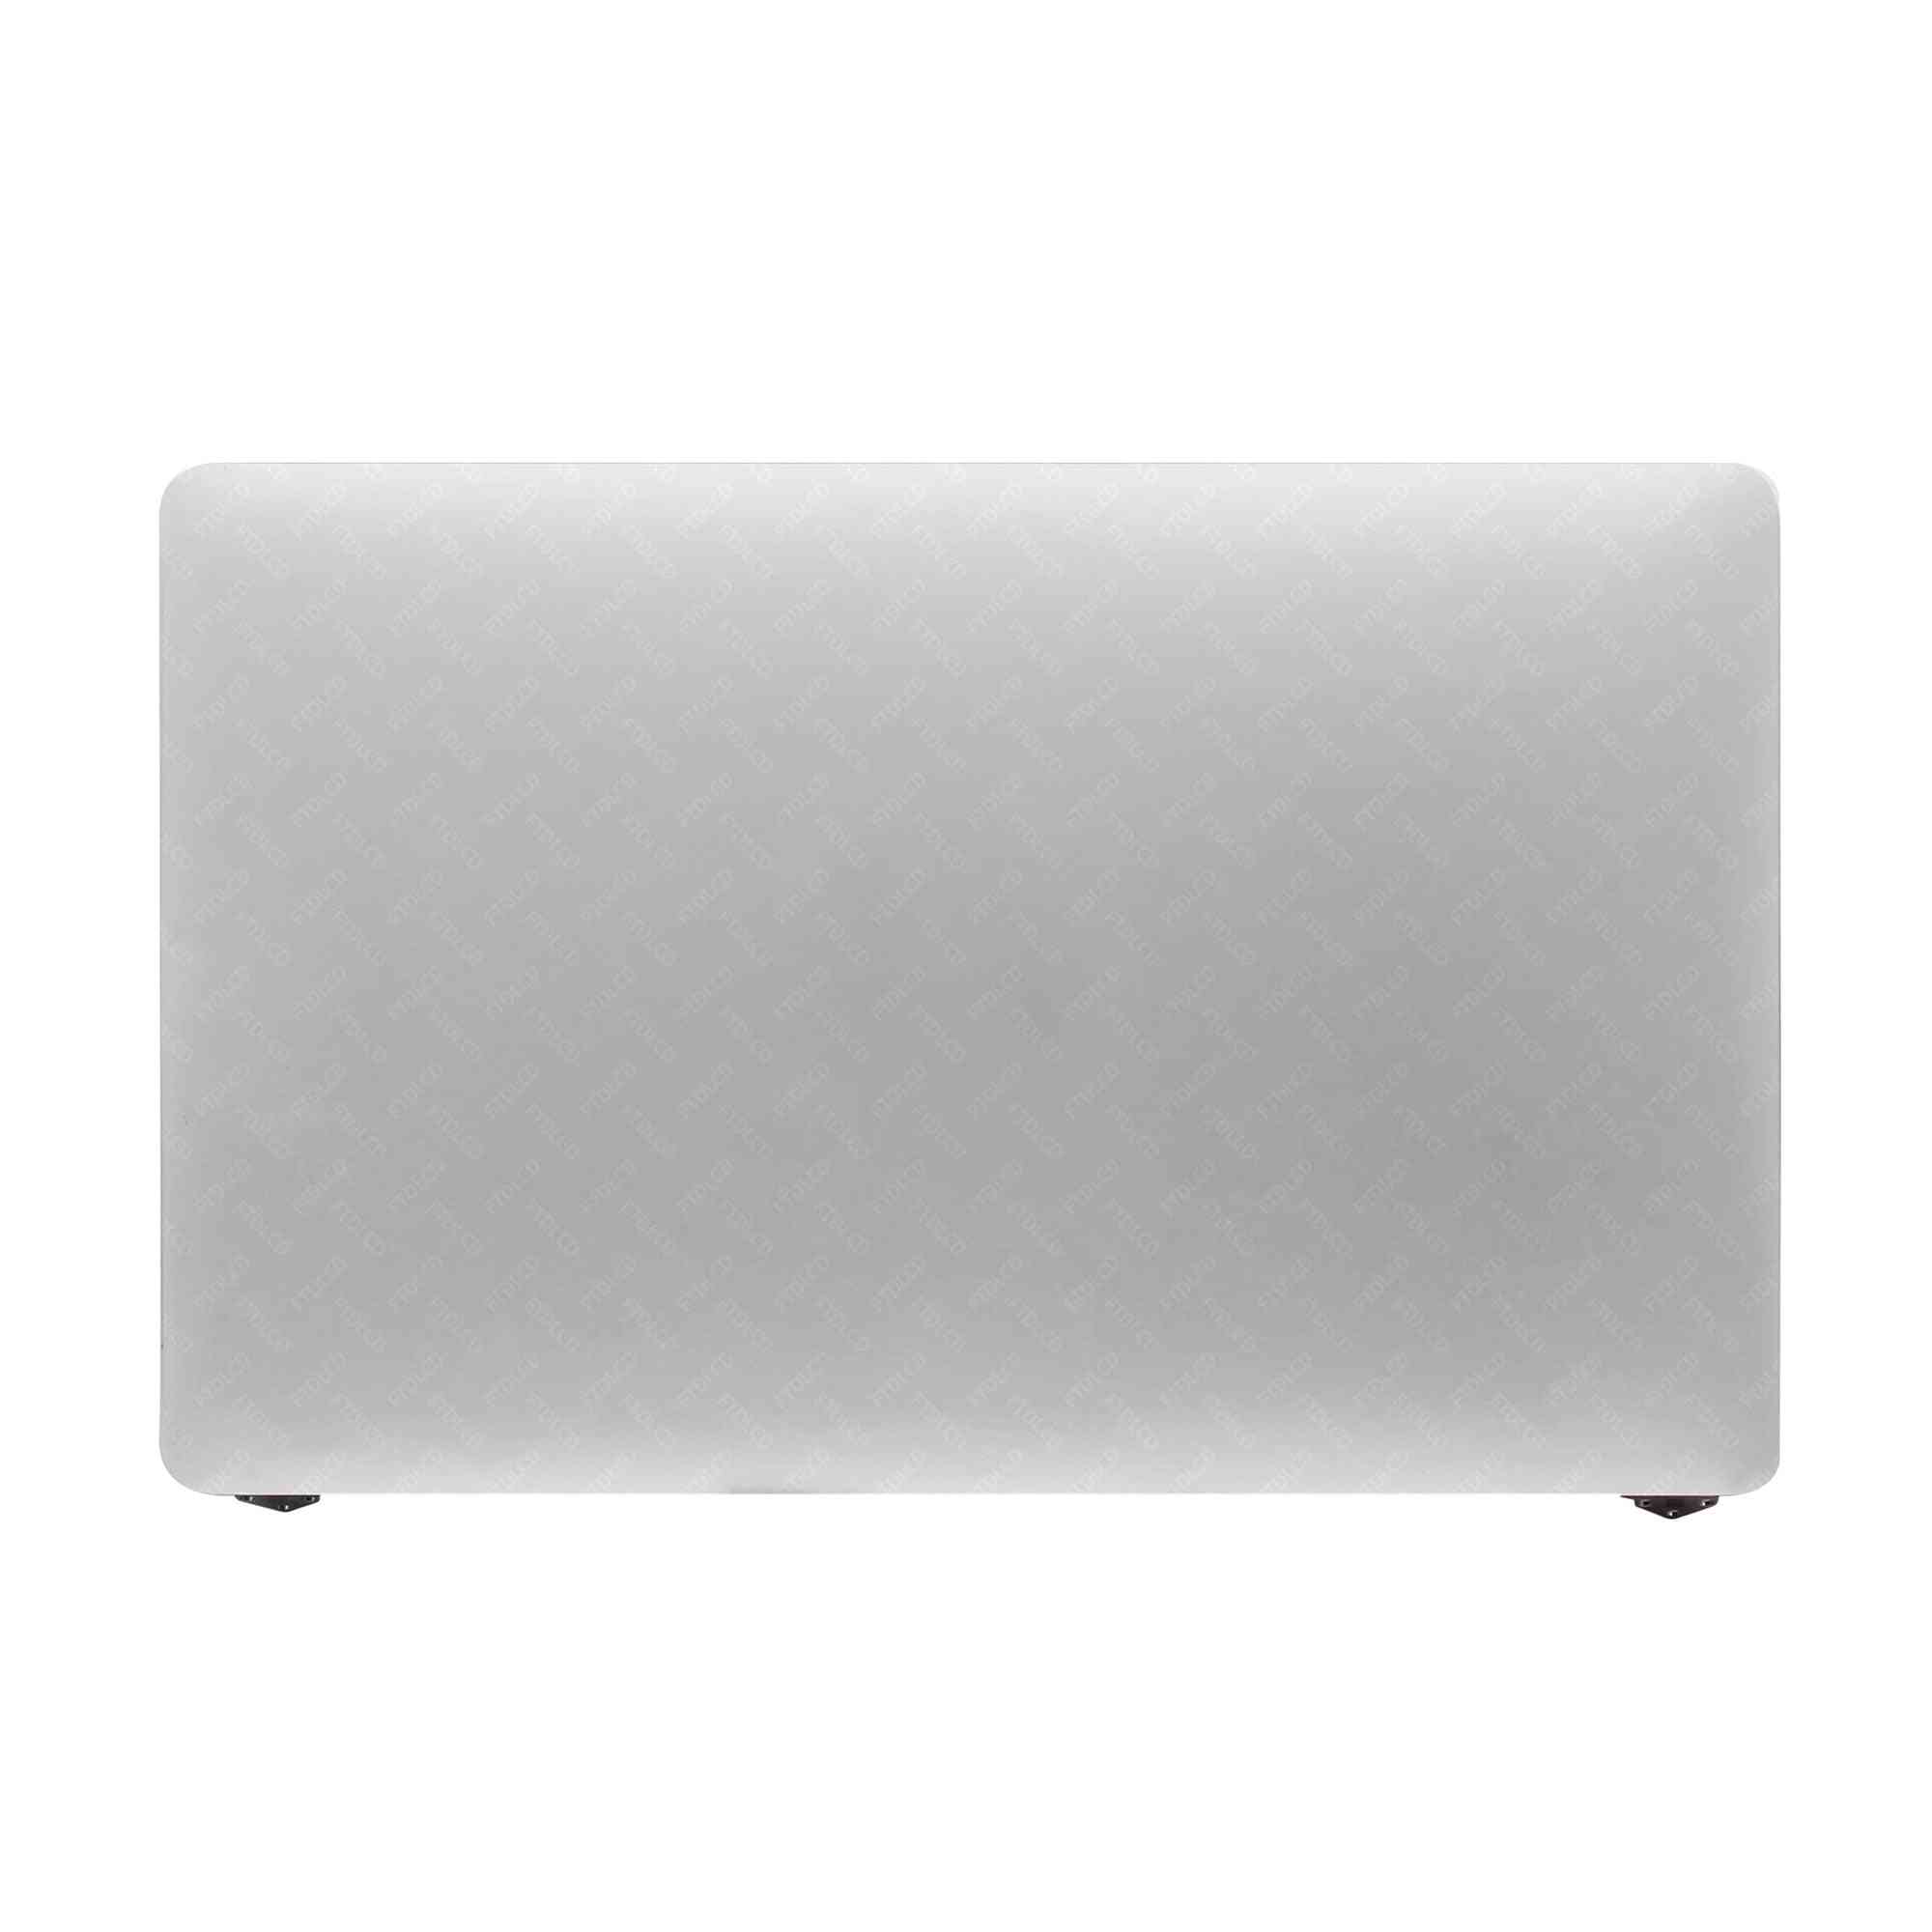 Rose & Gold A1932  Panel For Macbook Air Retina 13.3